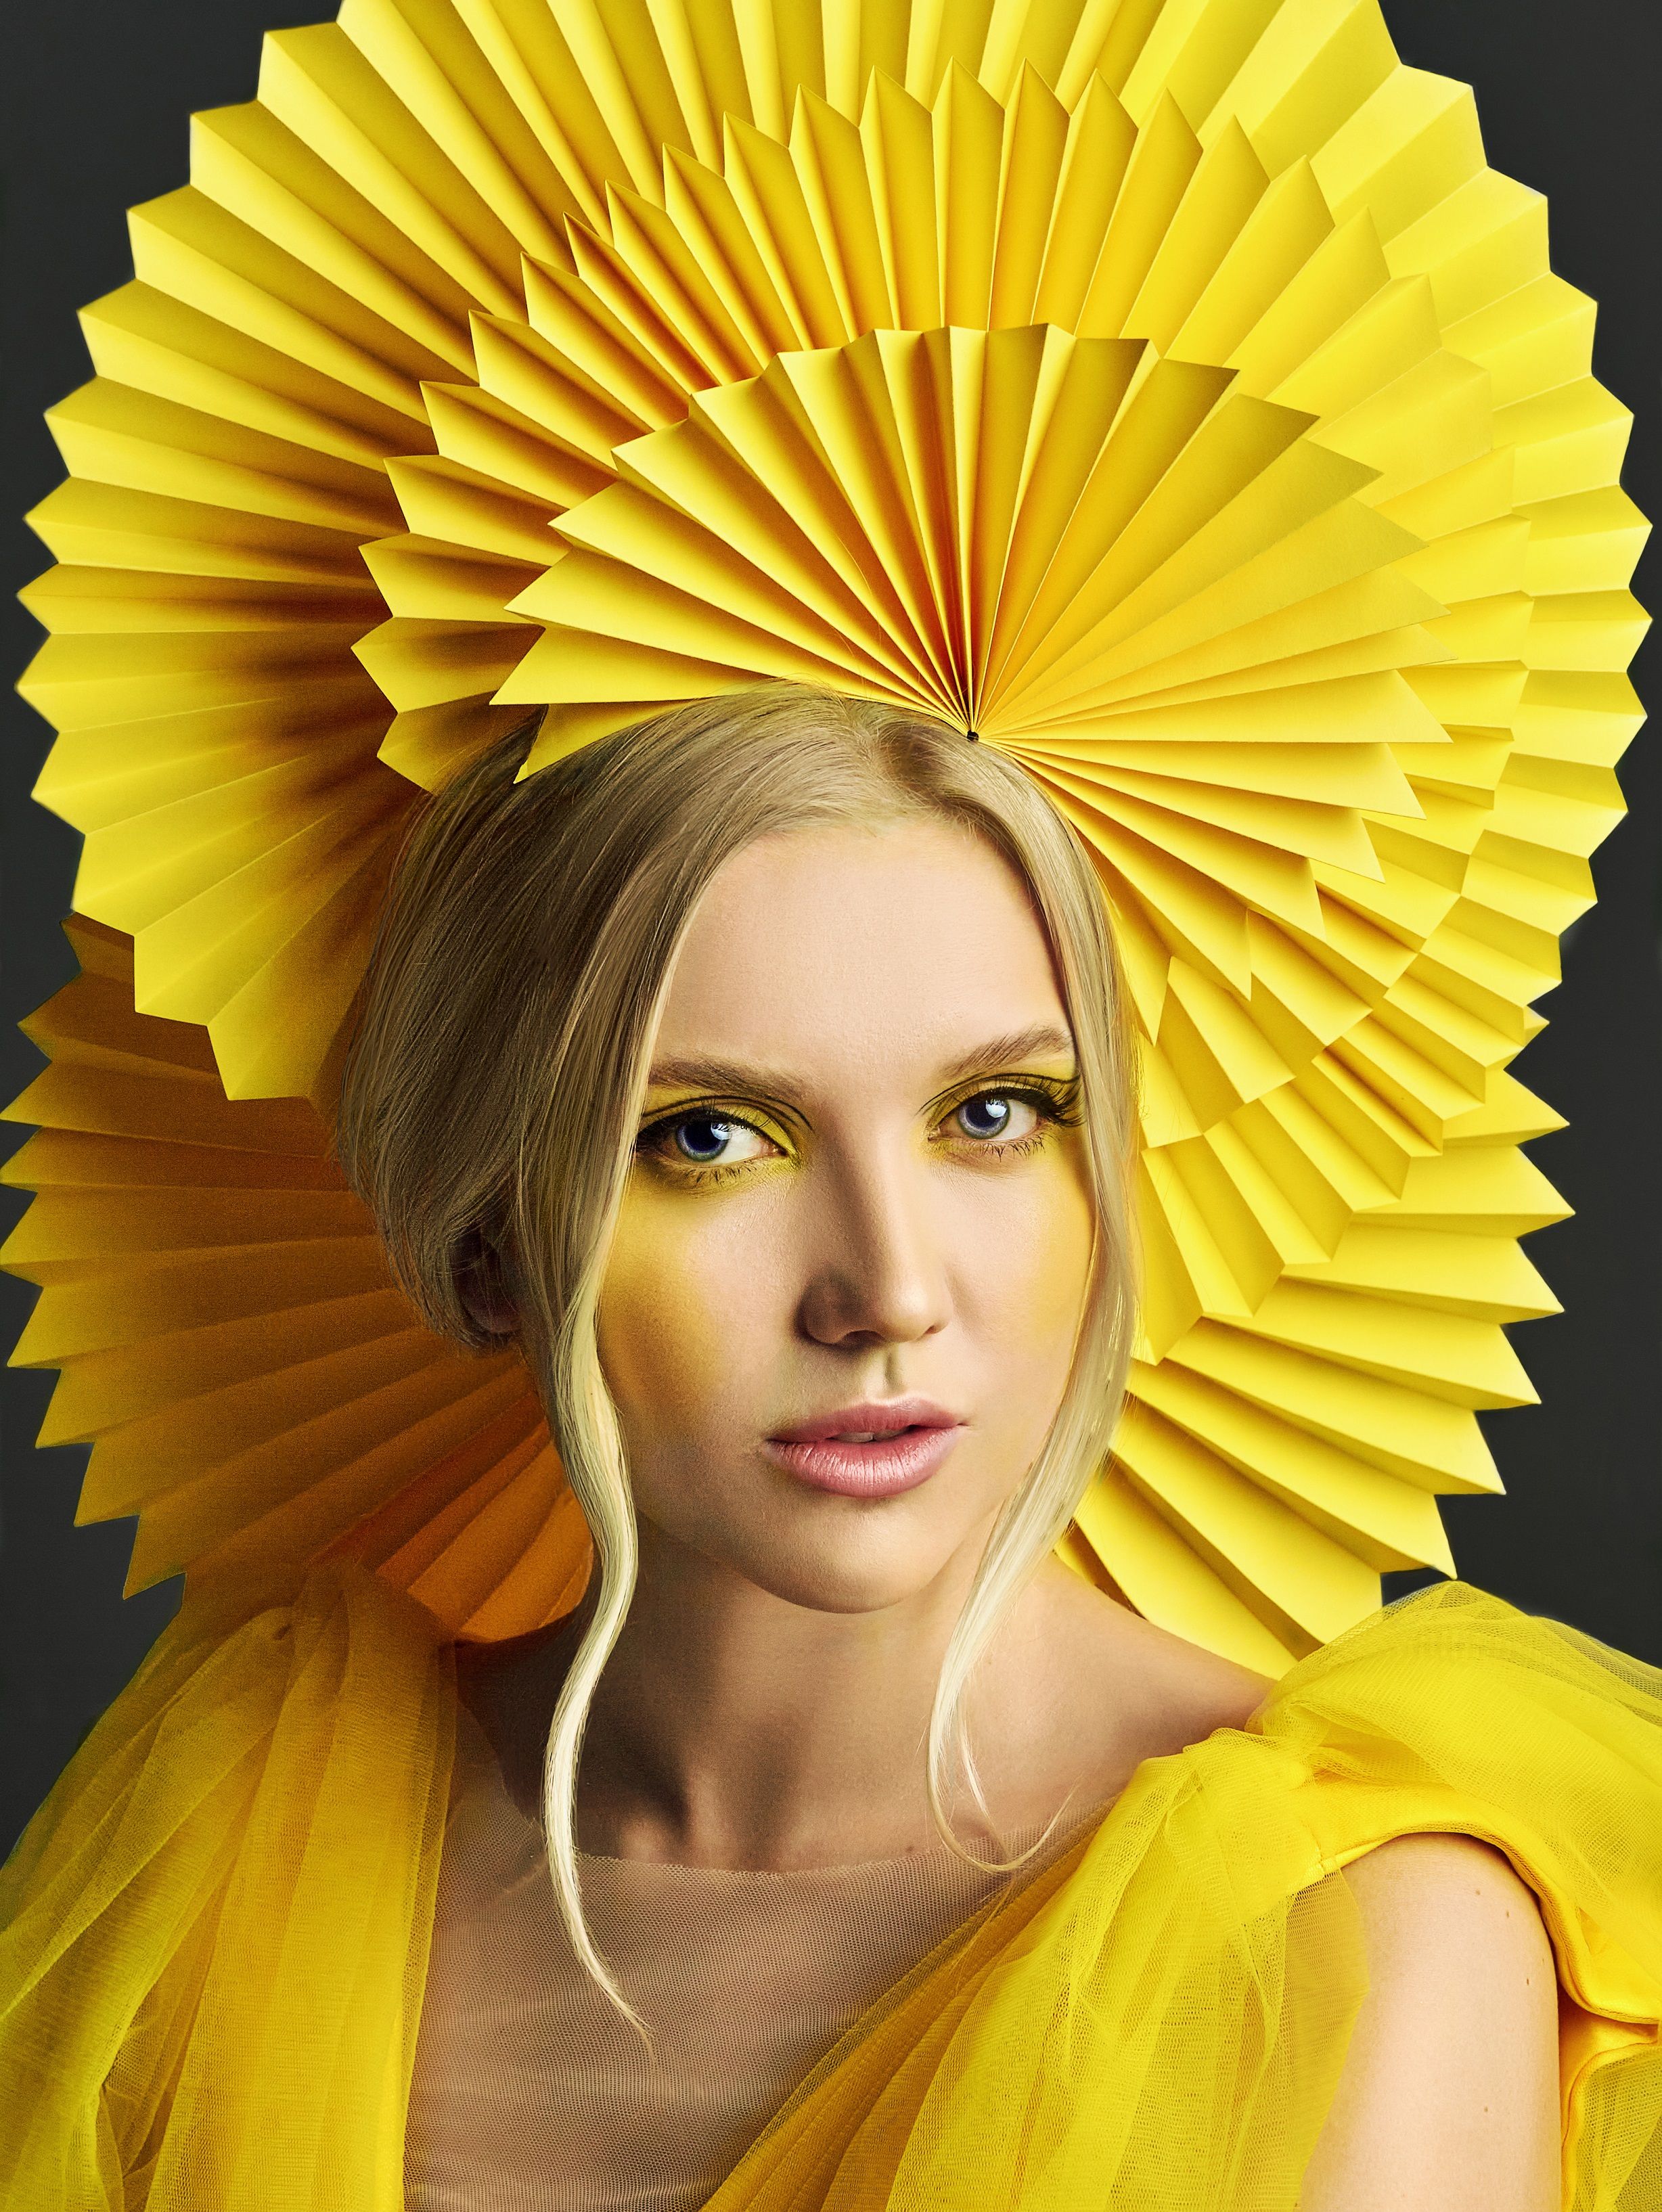 pantone, fashion, portrait, female portrait, illuminating yellow, фешн, портрет, женский портрет, желтый, Кристина Александриди